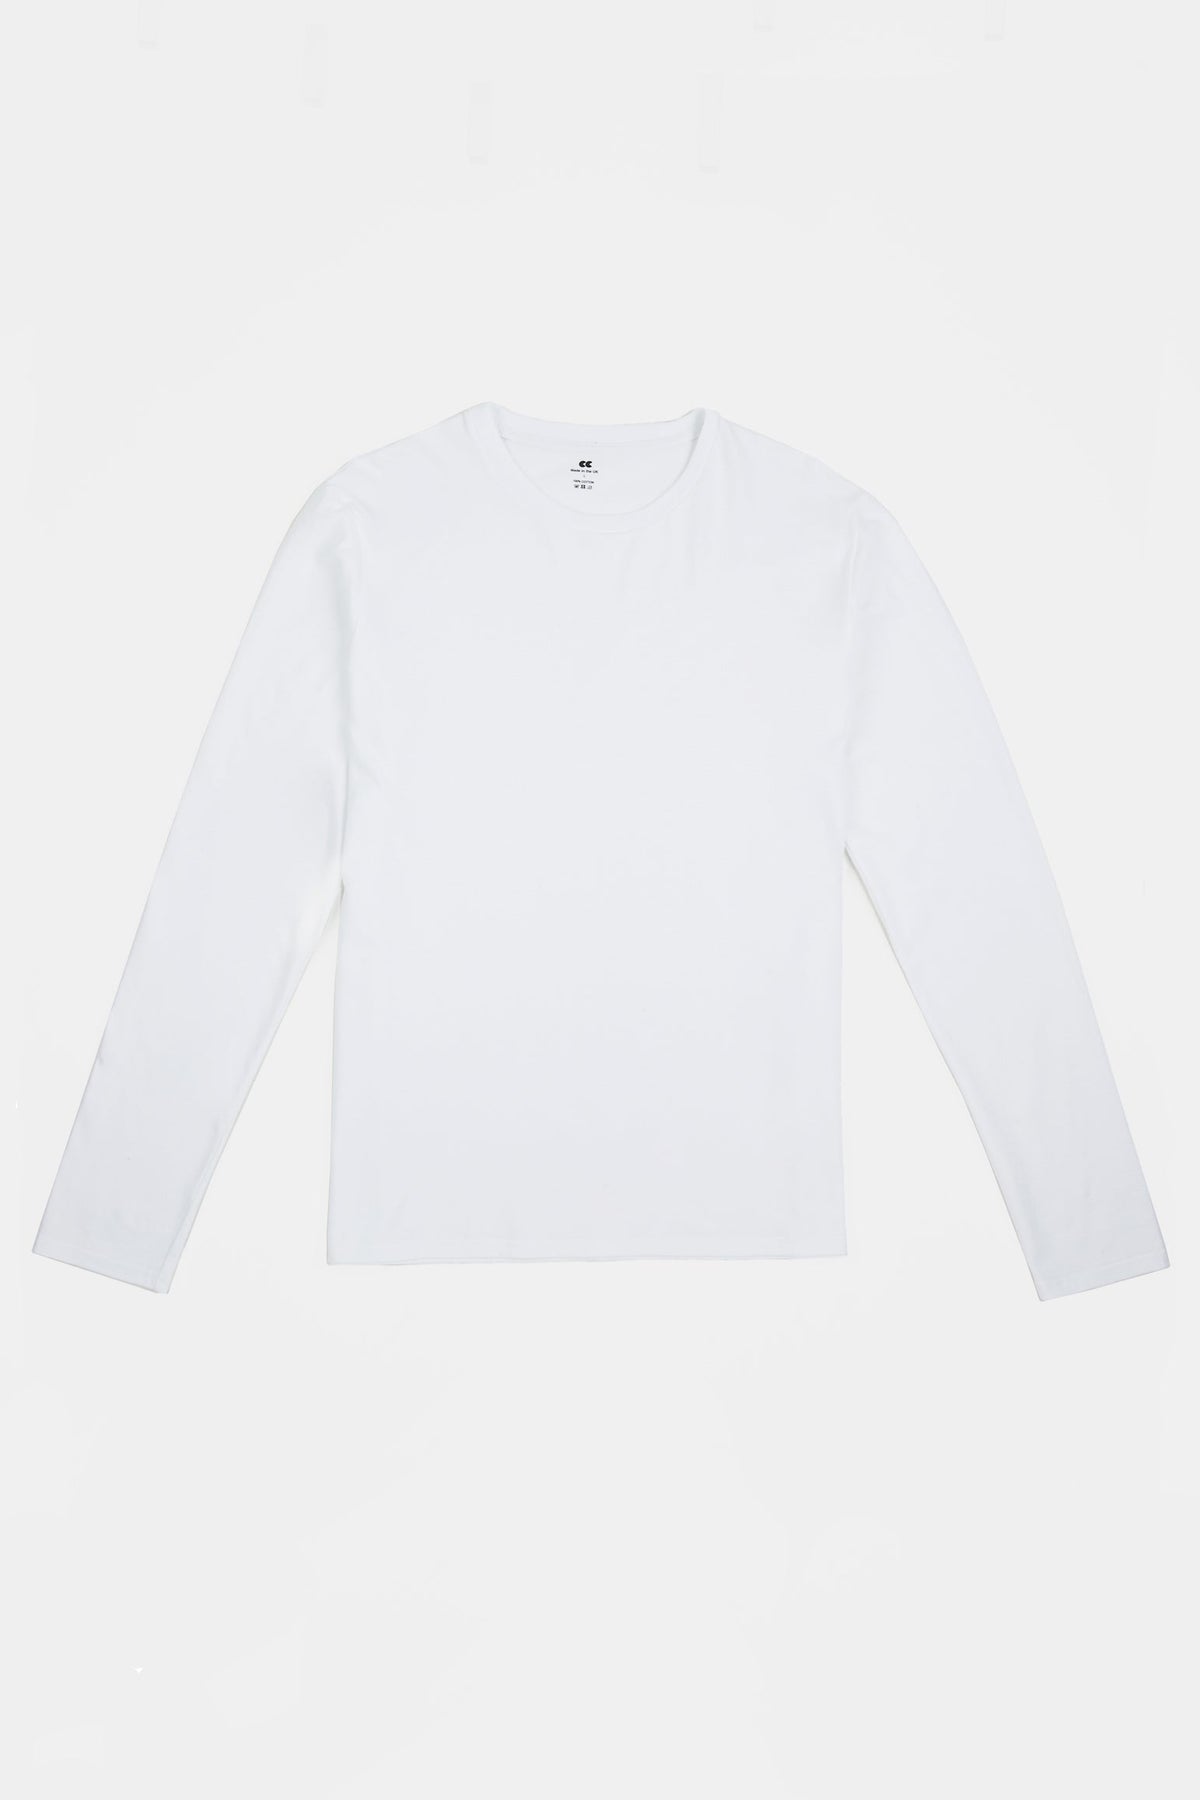 
            Men&#39;s long sleeve t-shirt white flat lay